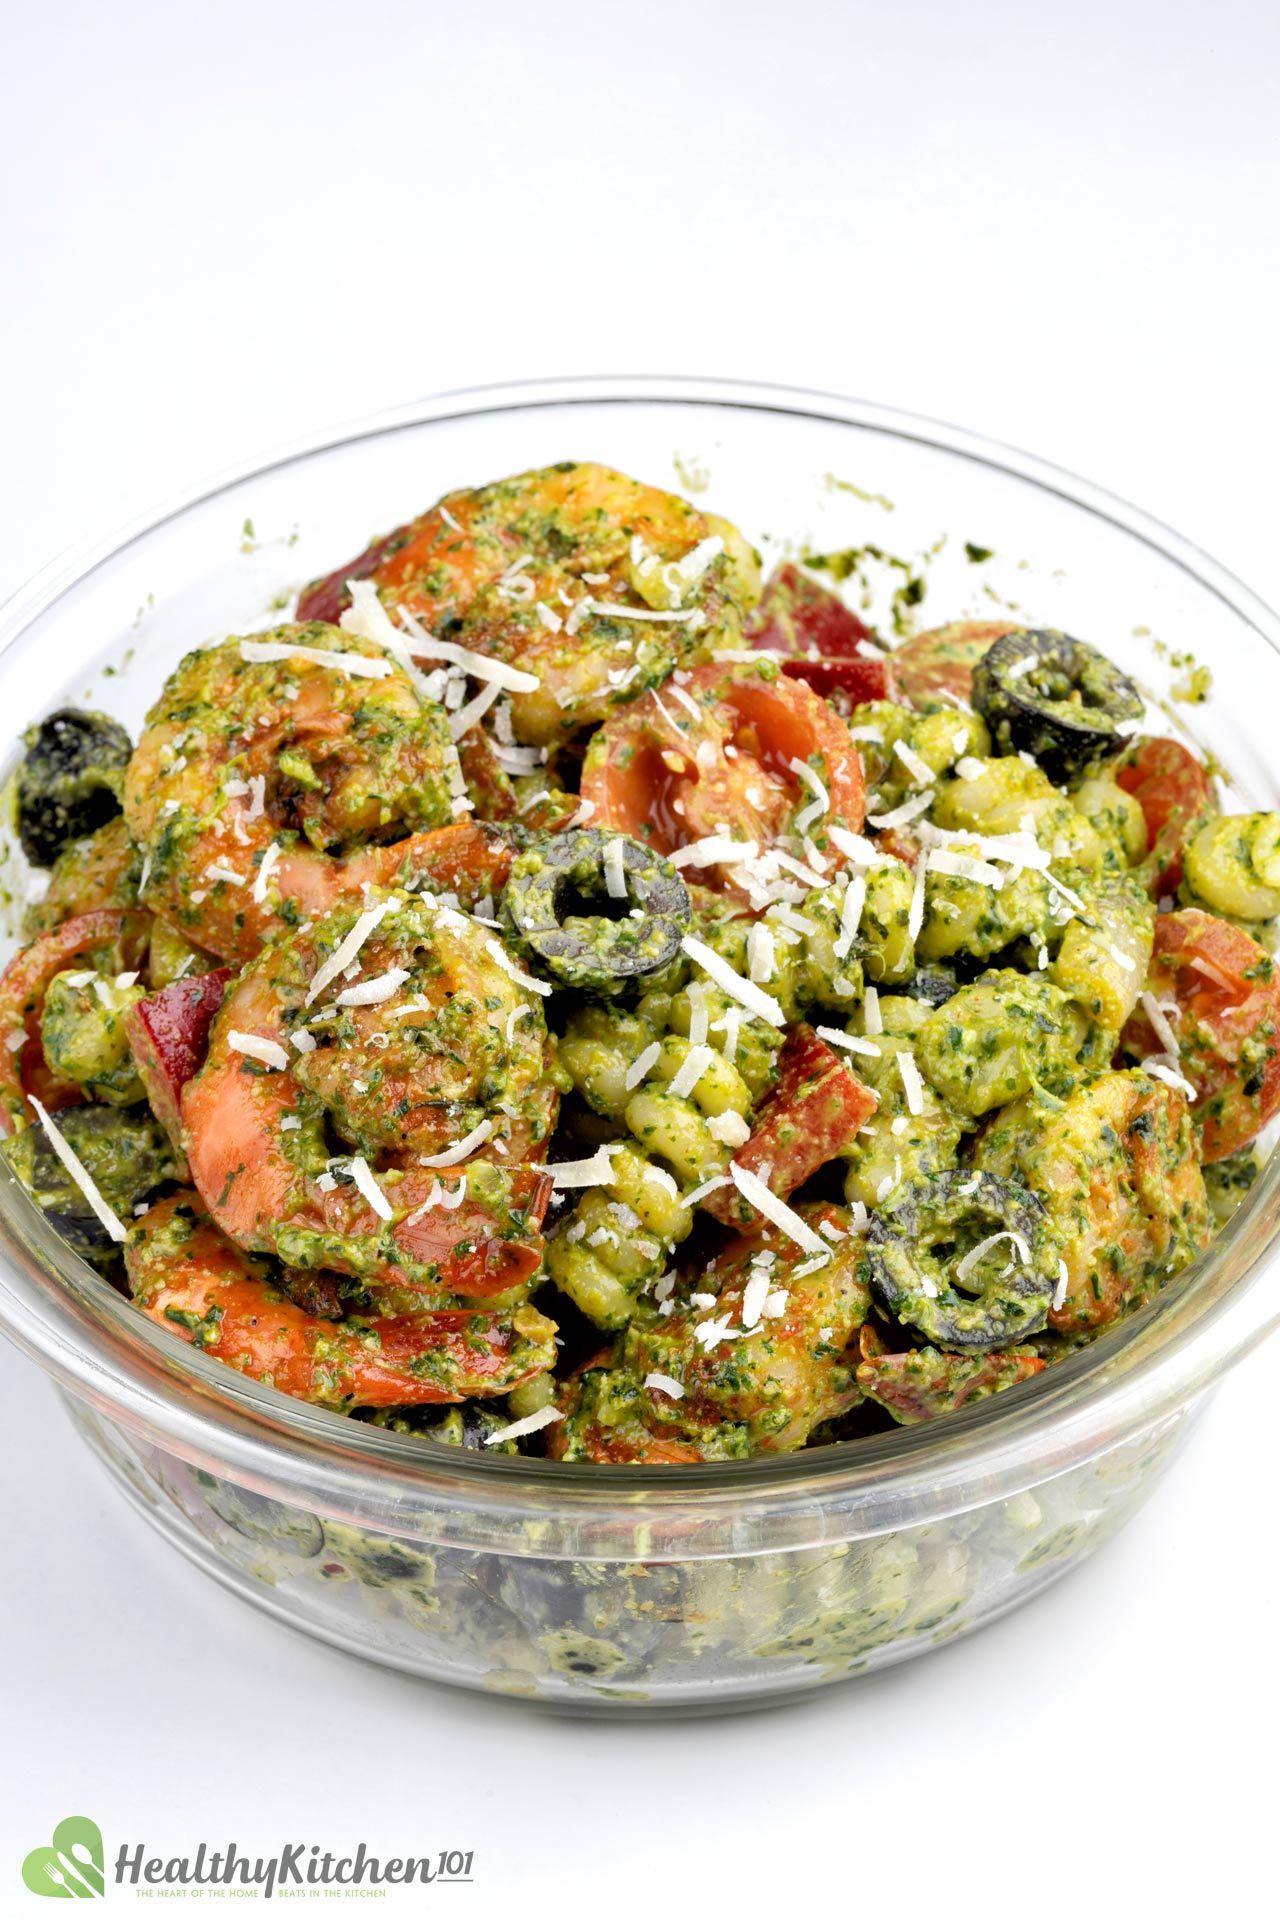 Homemade Pesto Pasta Salad